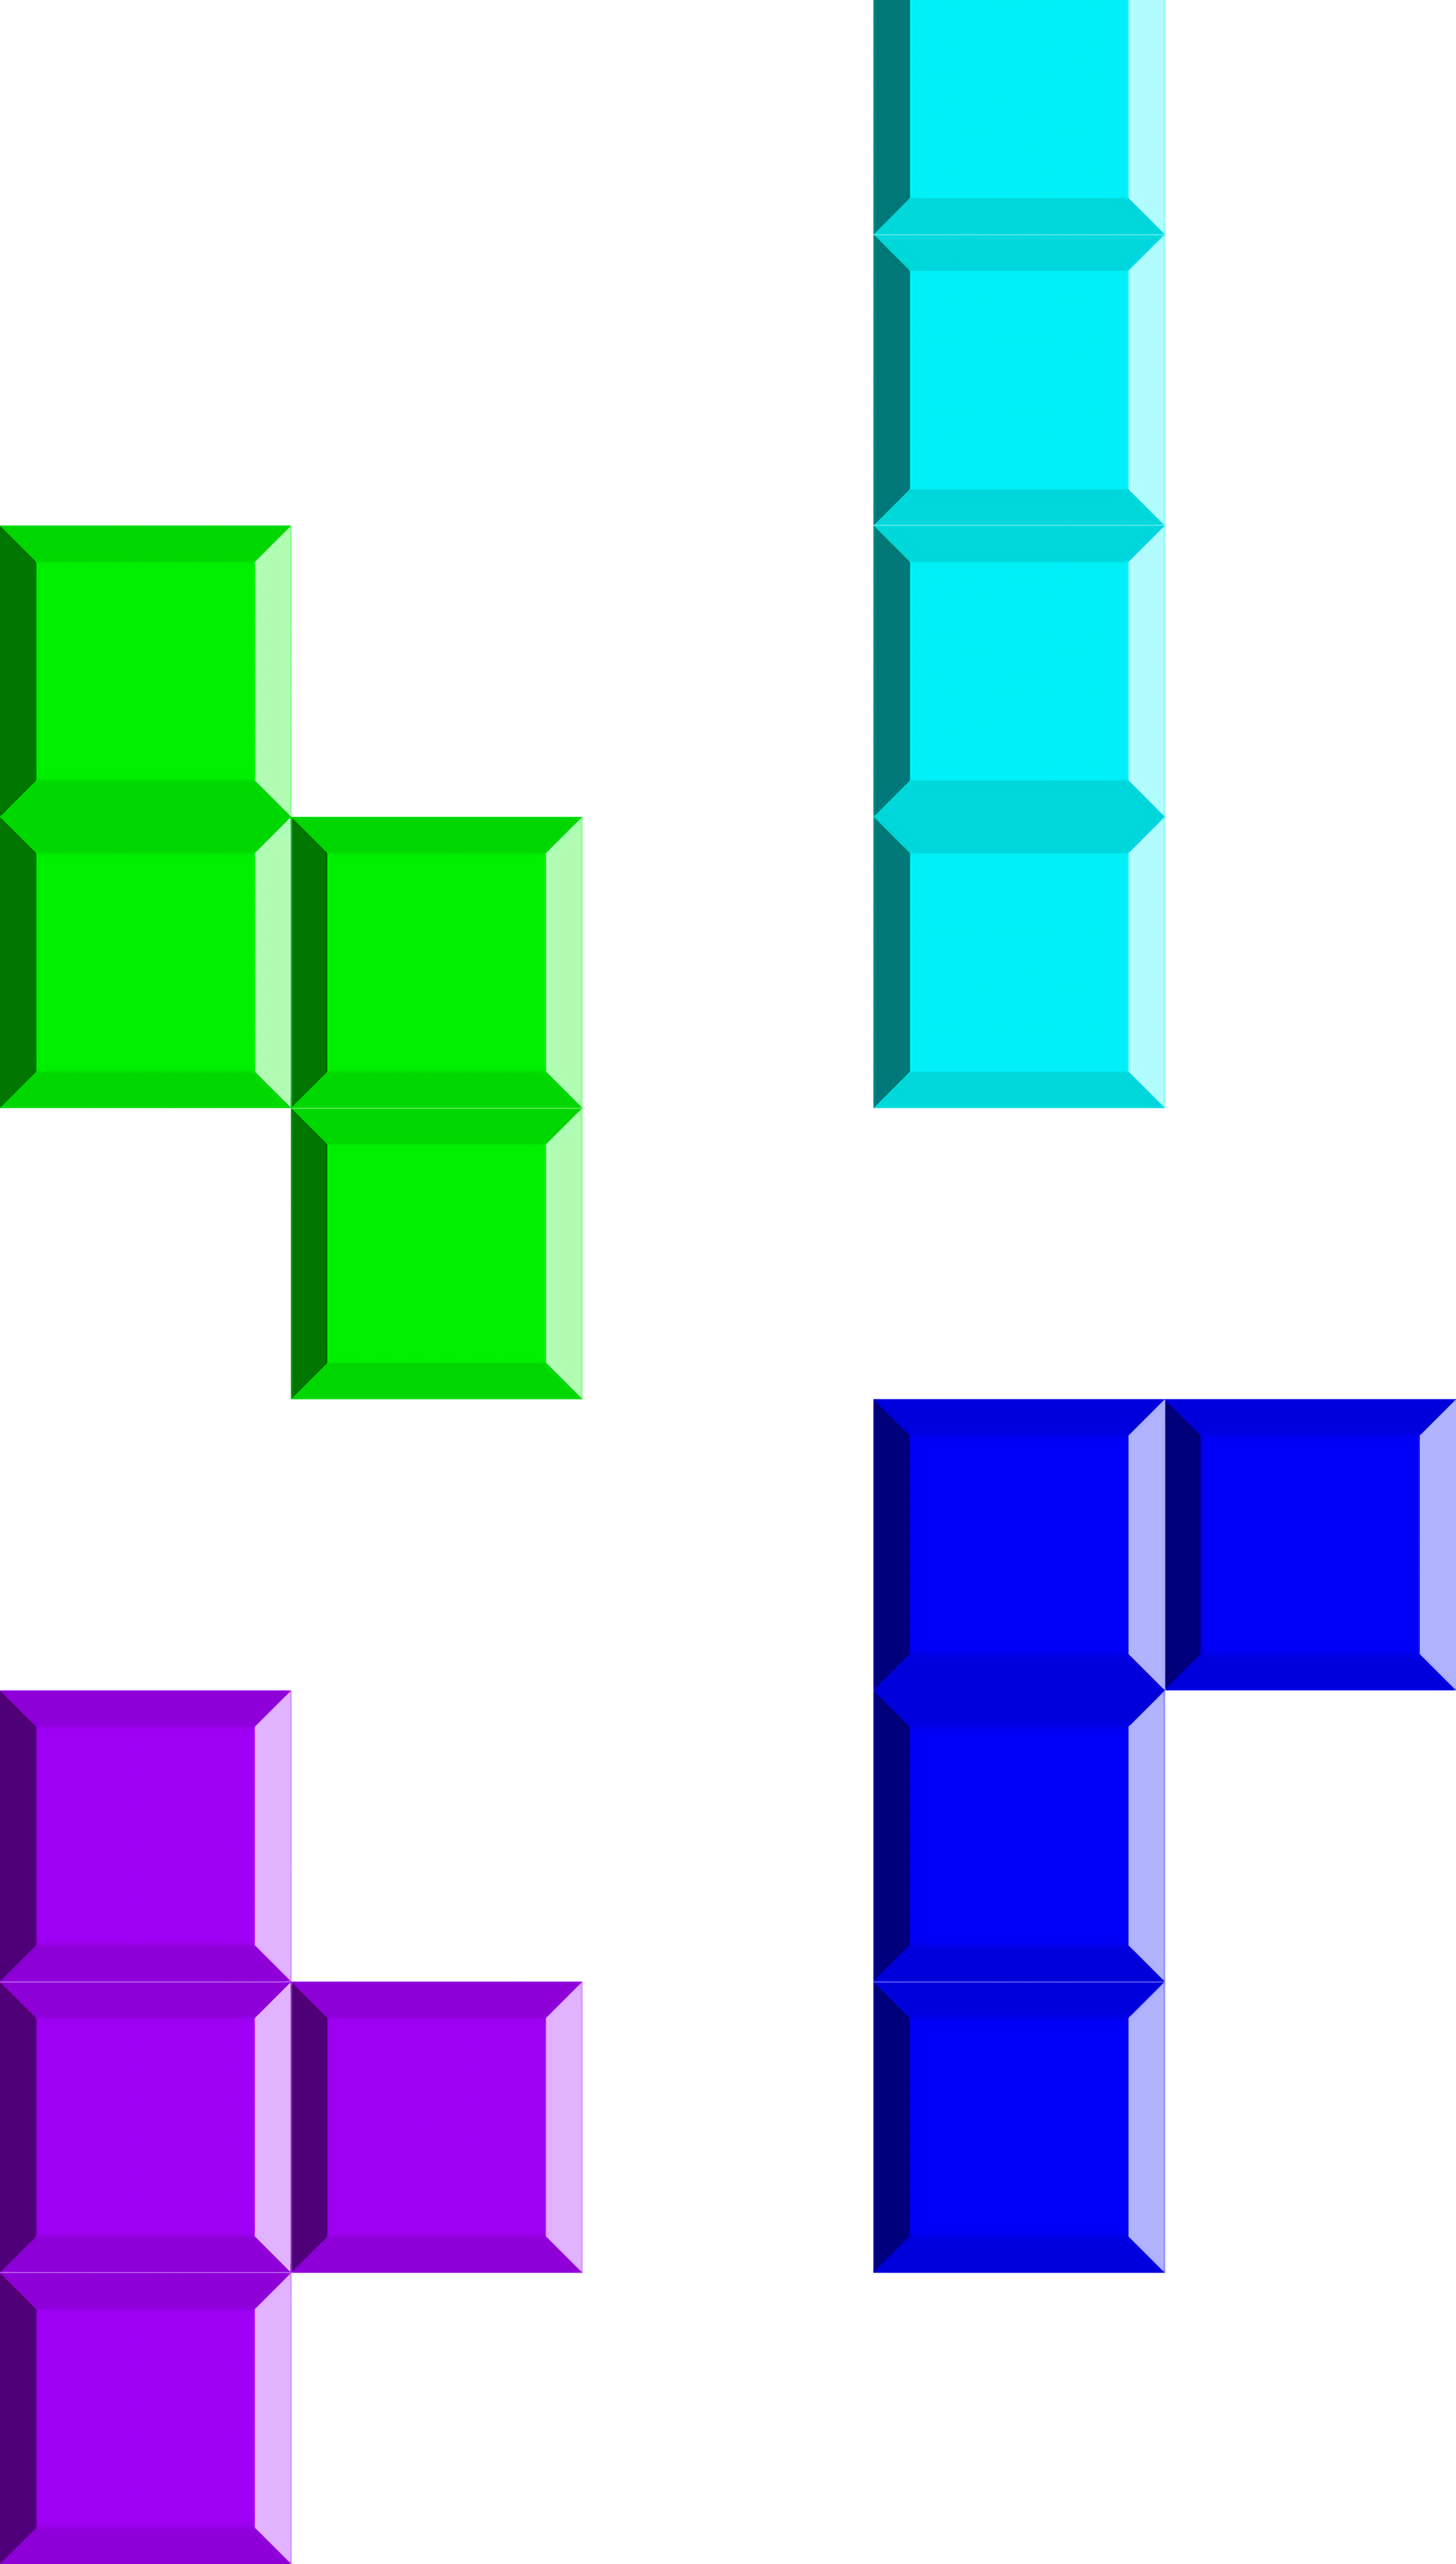 Tetris-Spiele